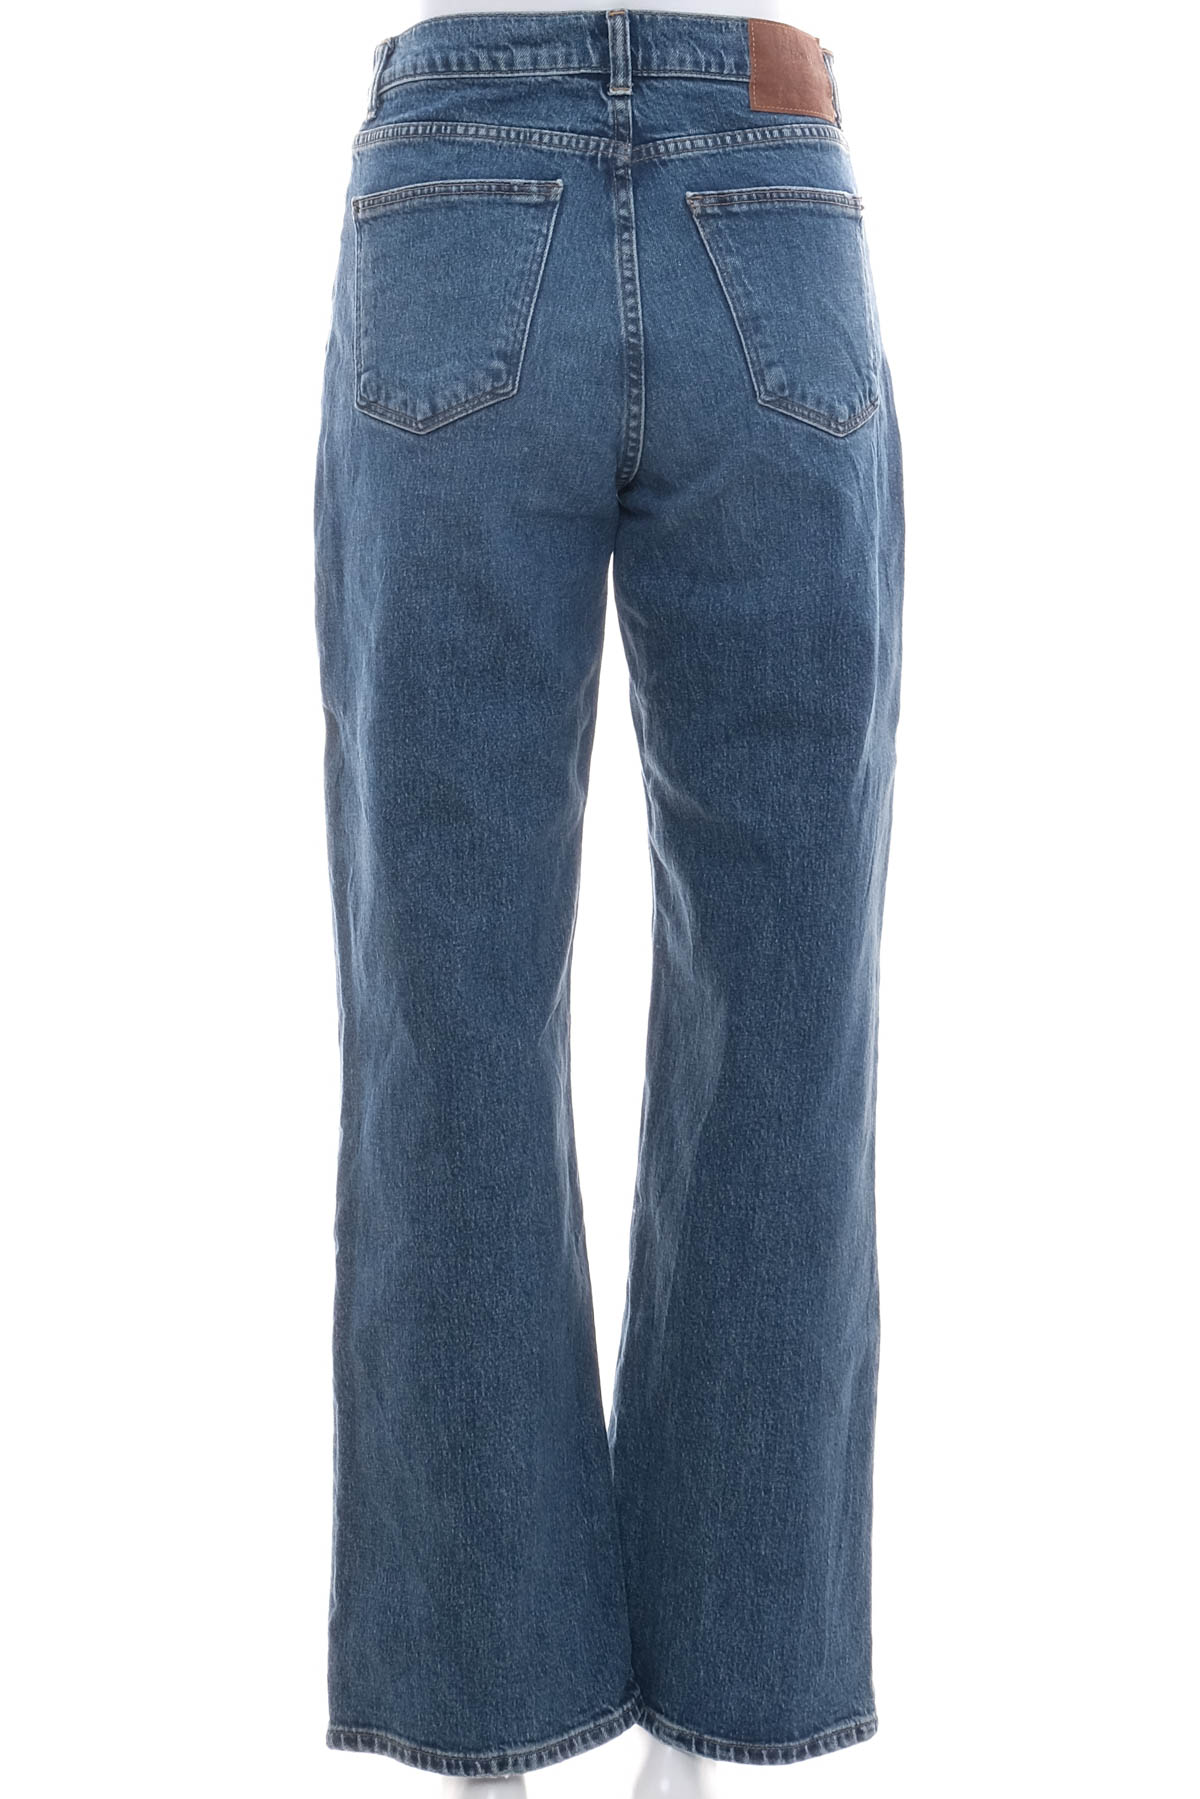 Jeans de damă - C&A - 1